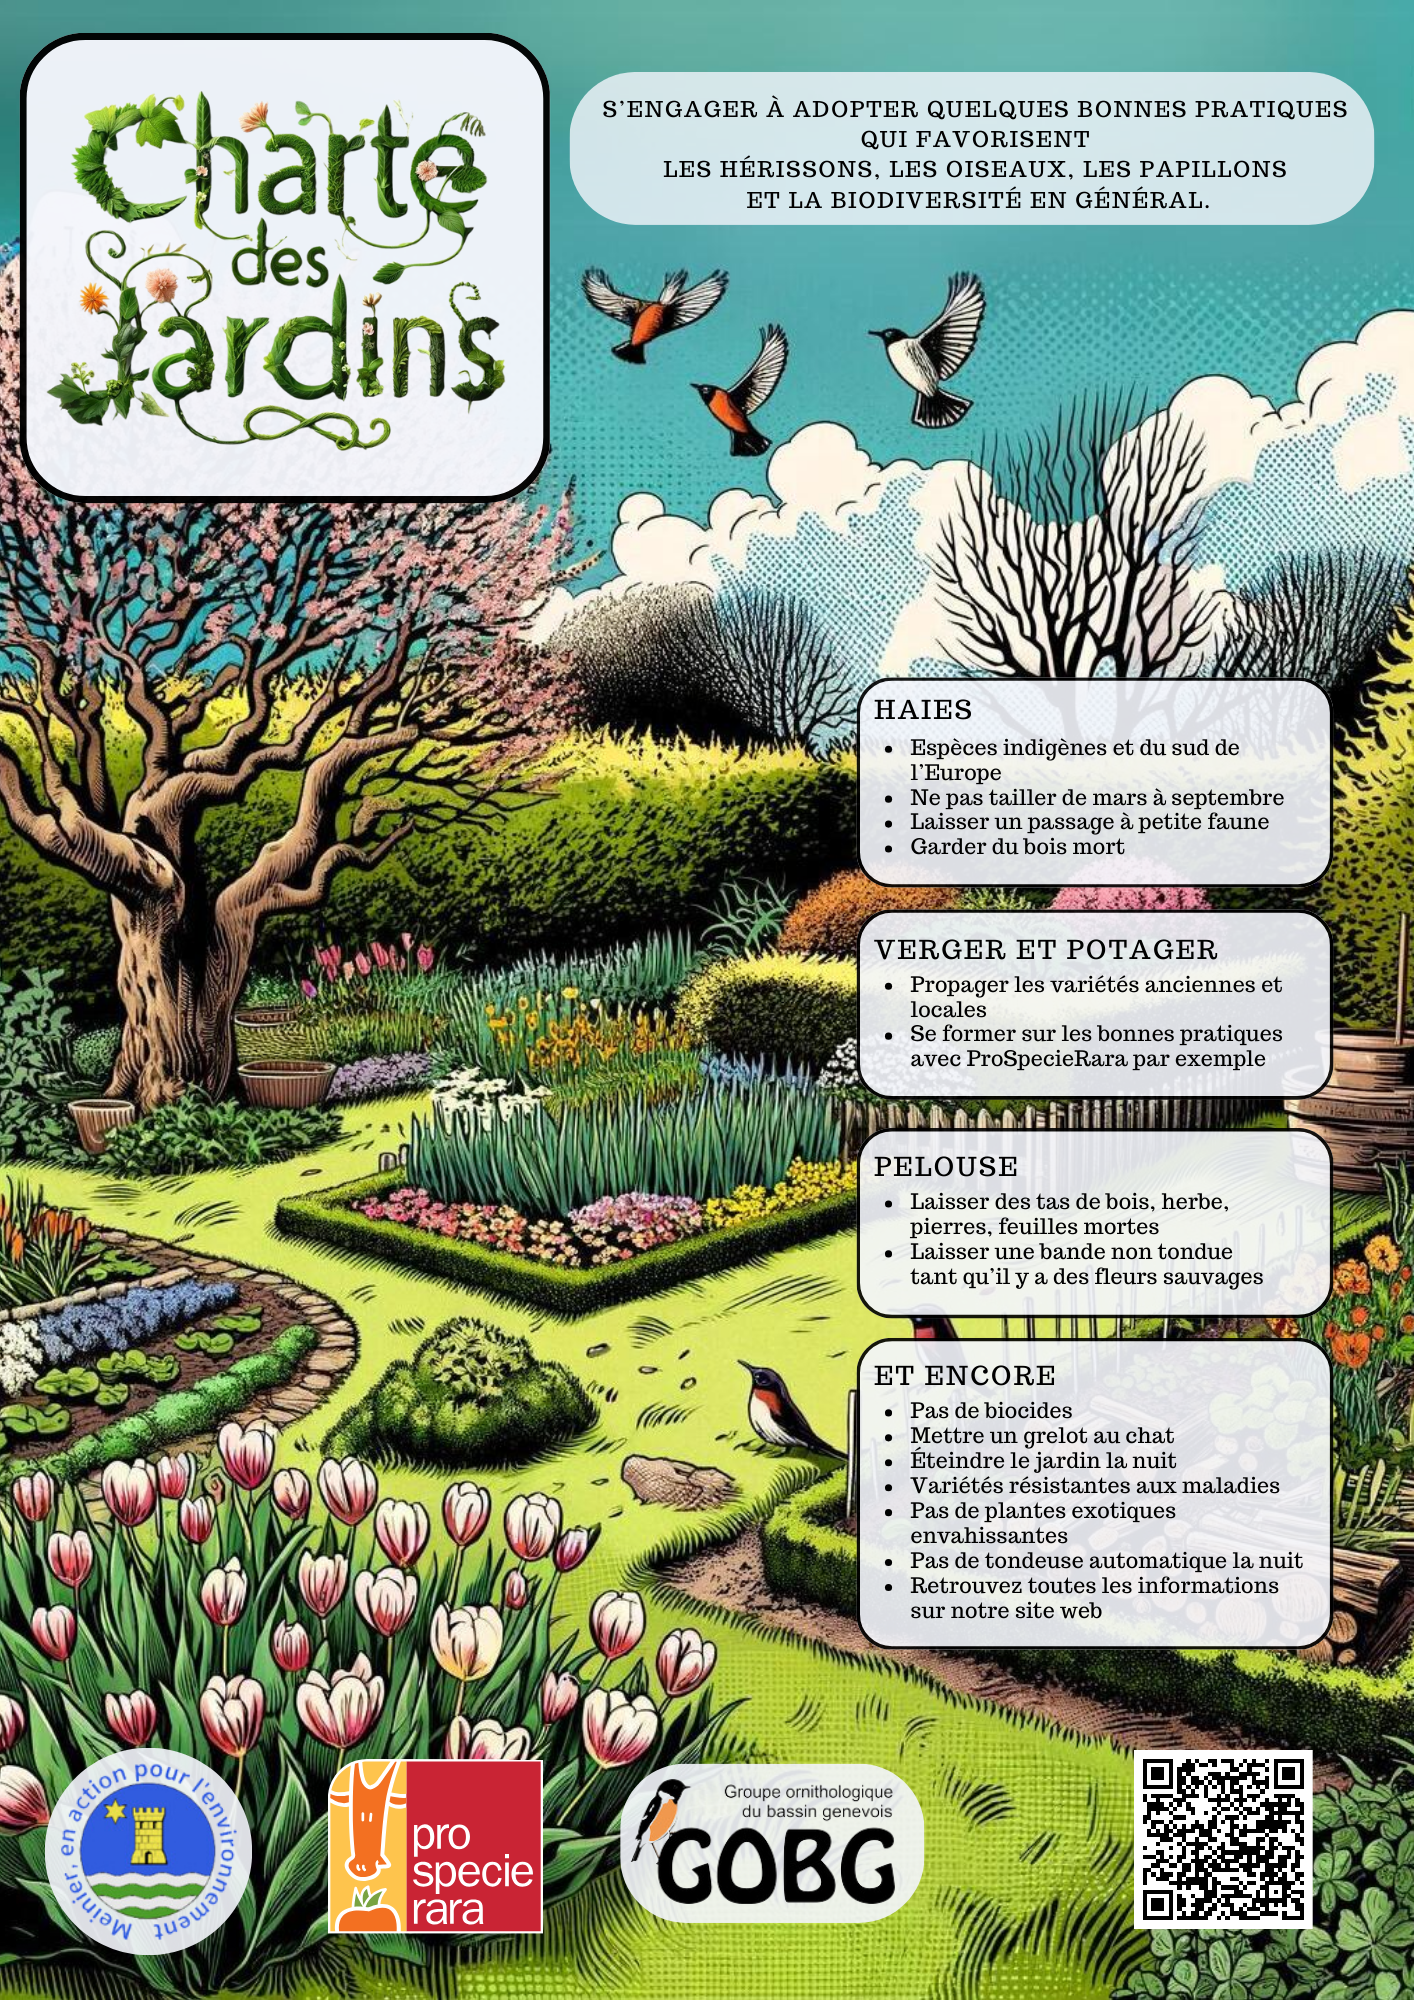 Charte des jardins